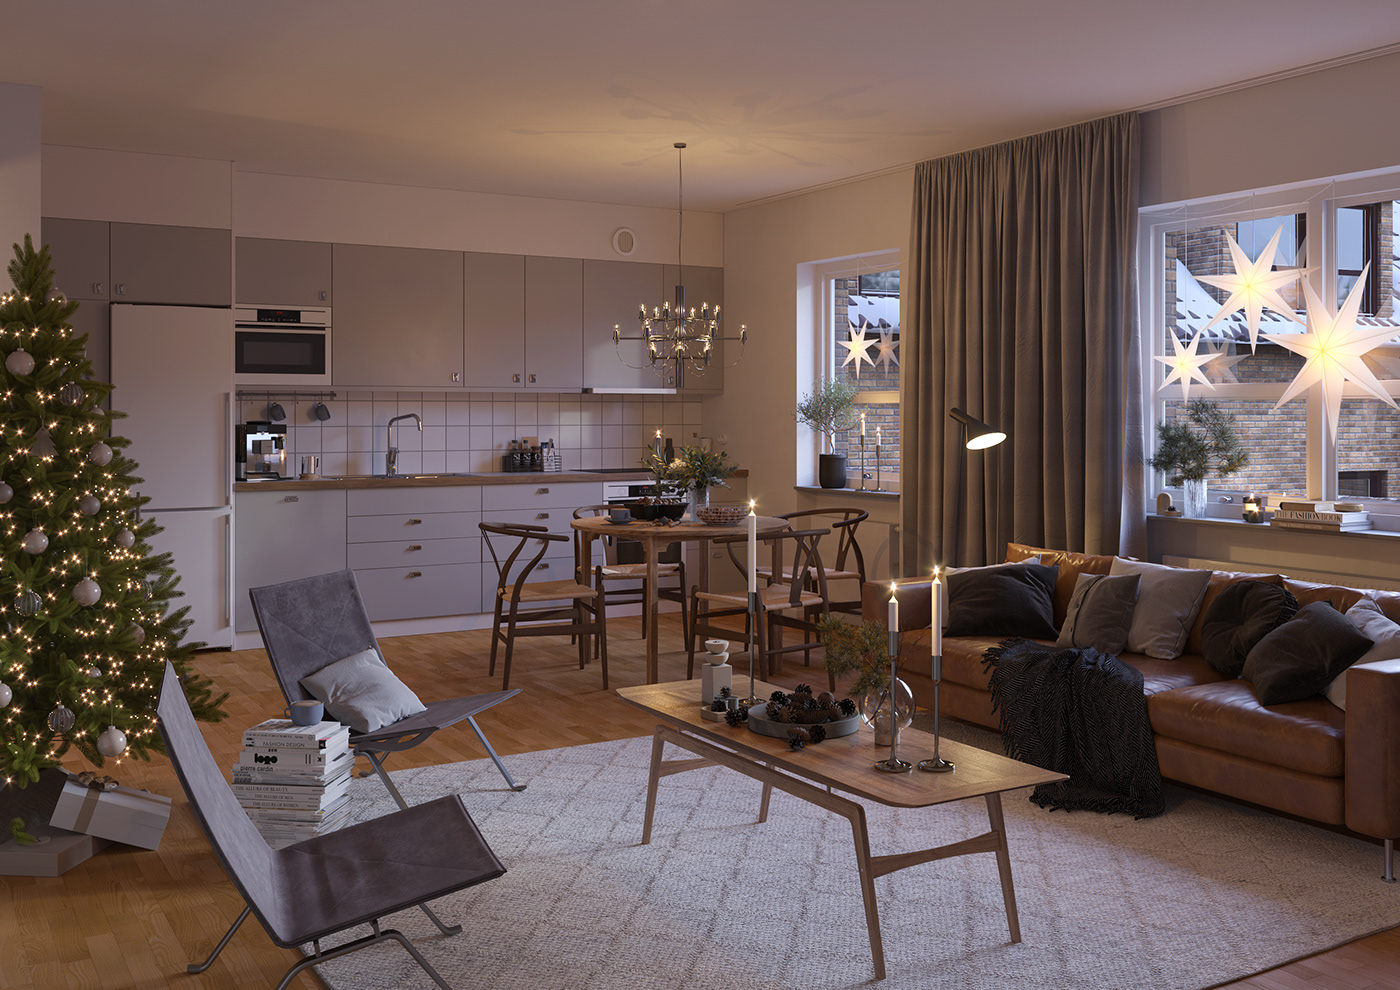 3D 3ds max archviz corona Interior interior design  kitchen livingroom Render visualization